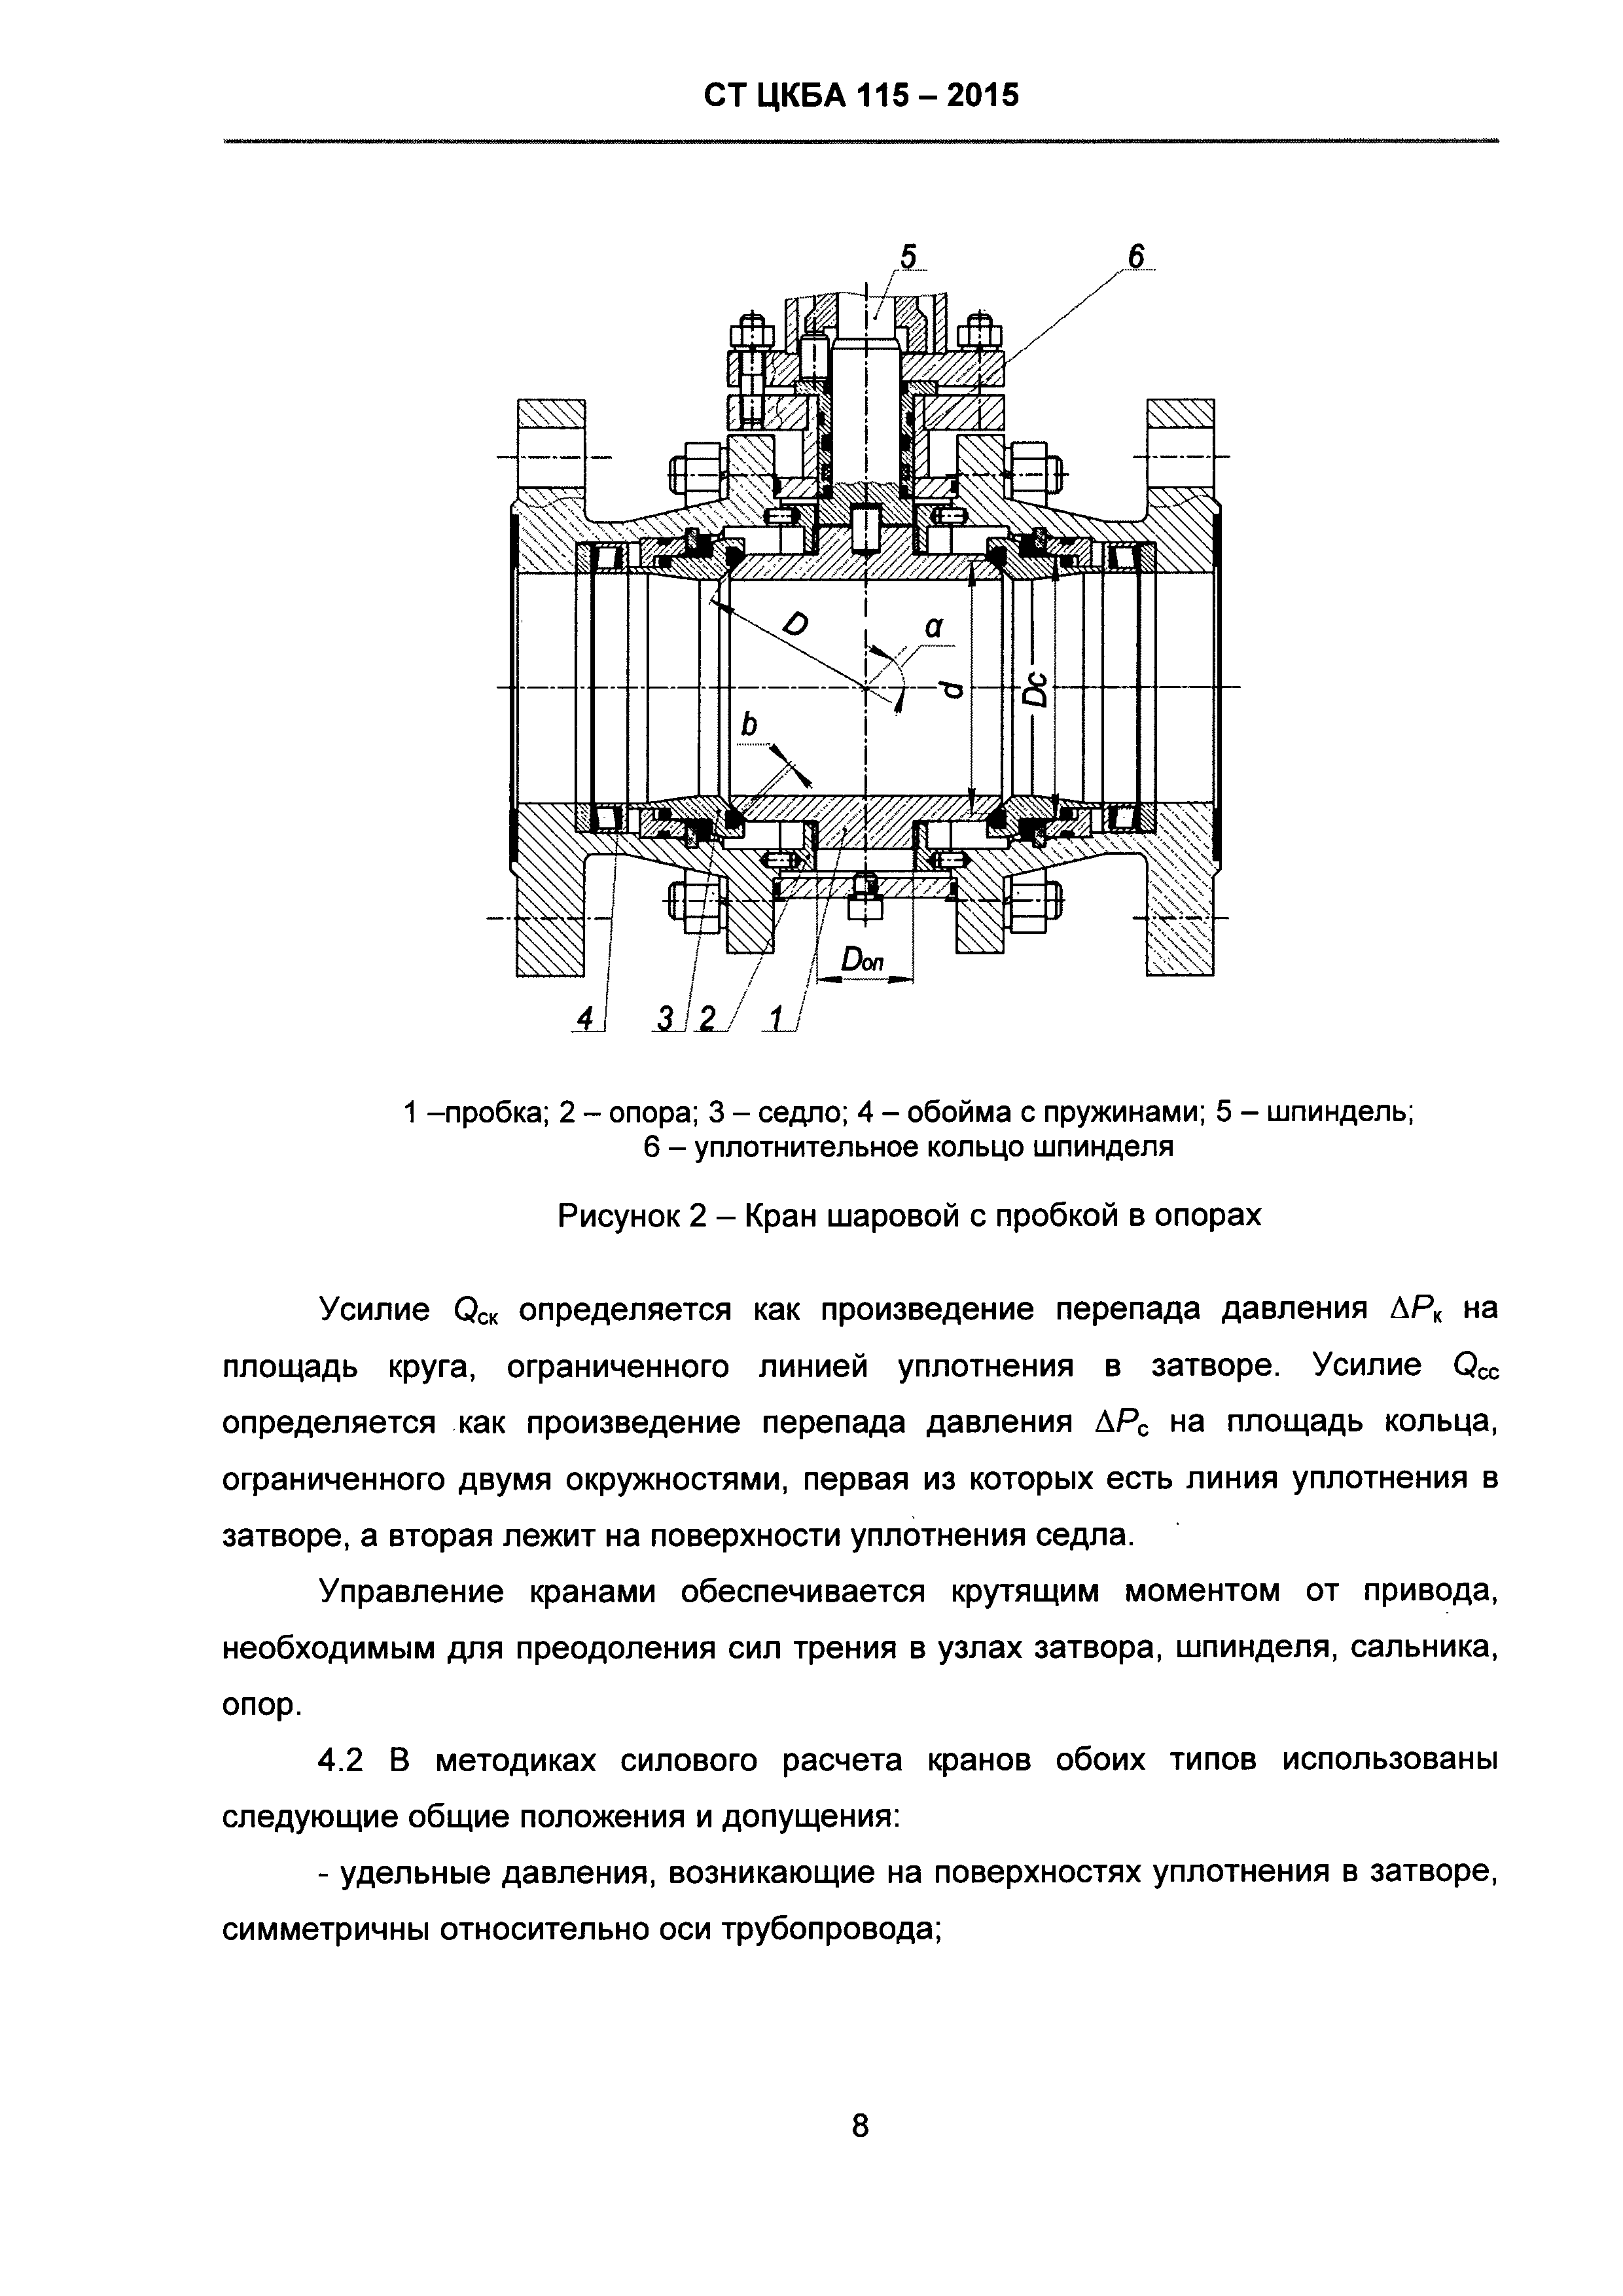 СТ ЦКБА 115-2015